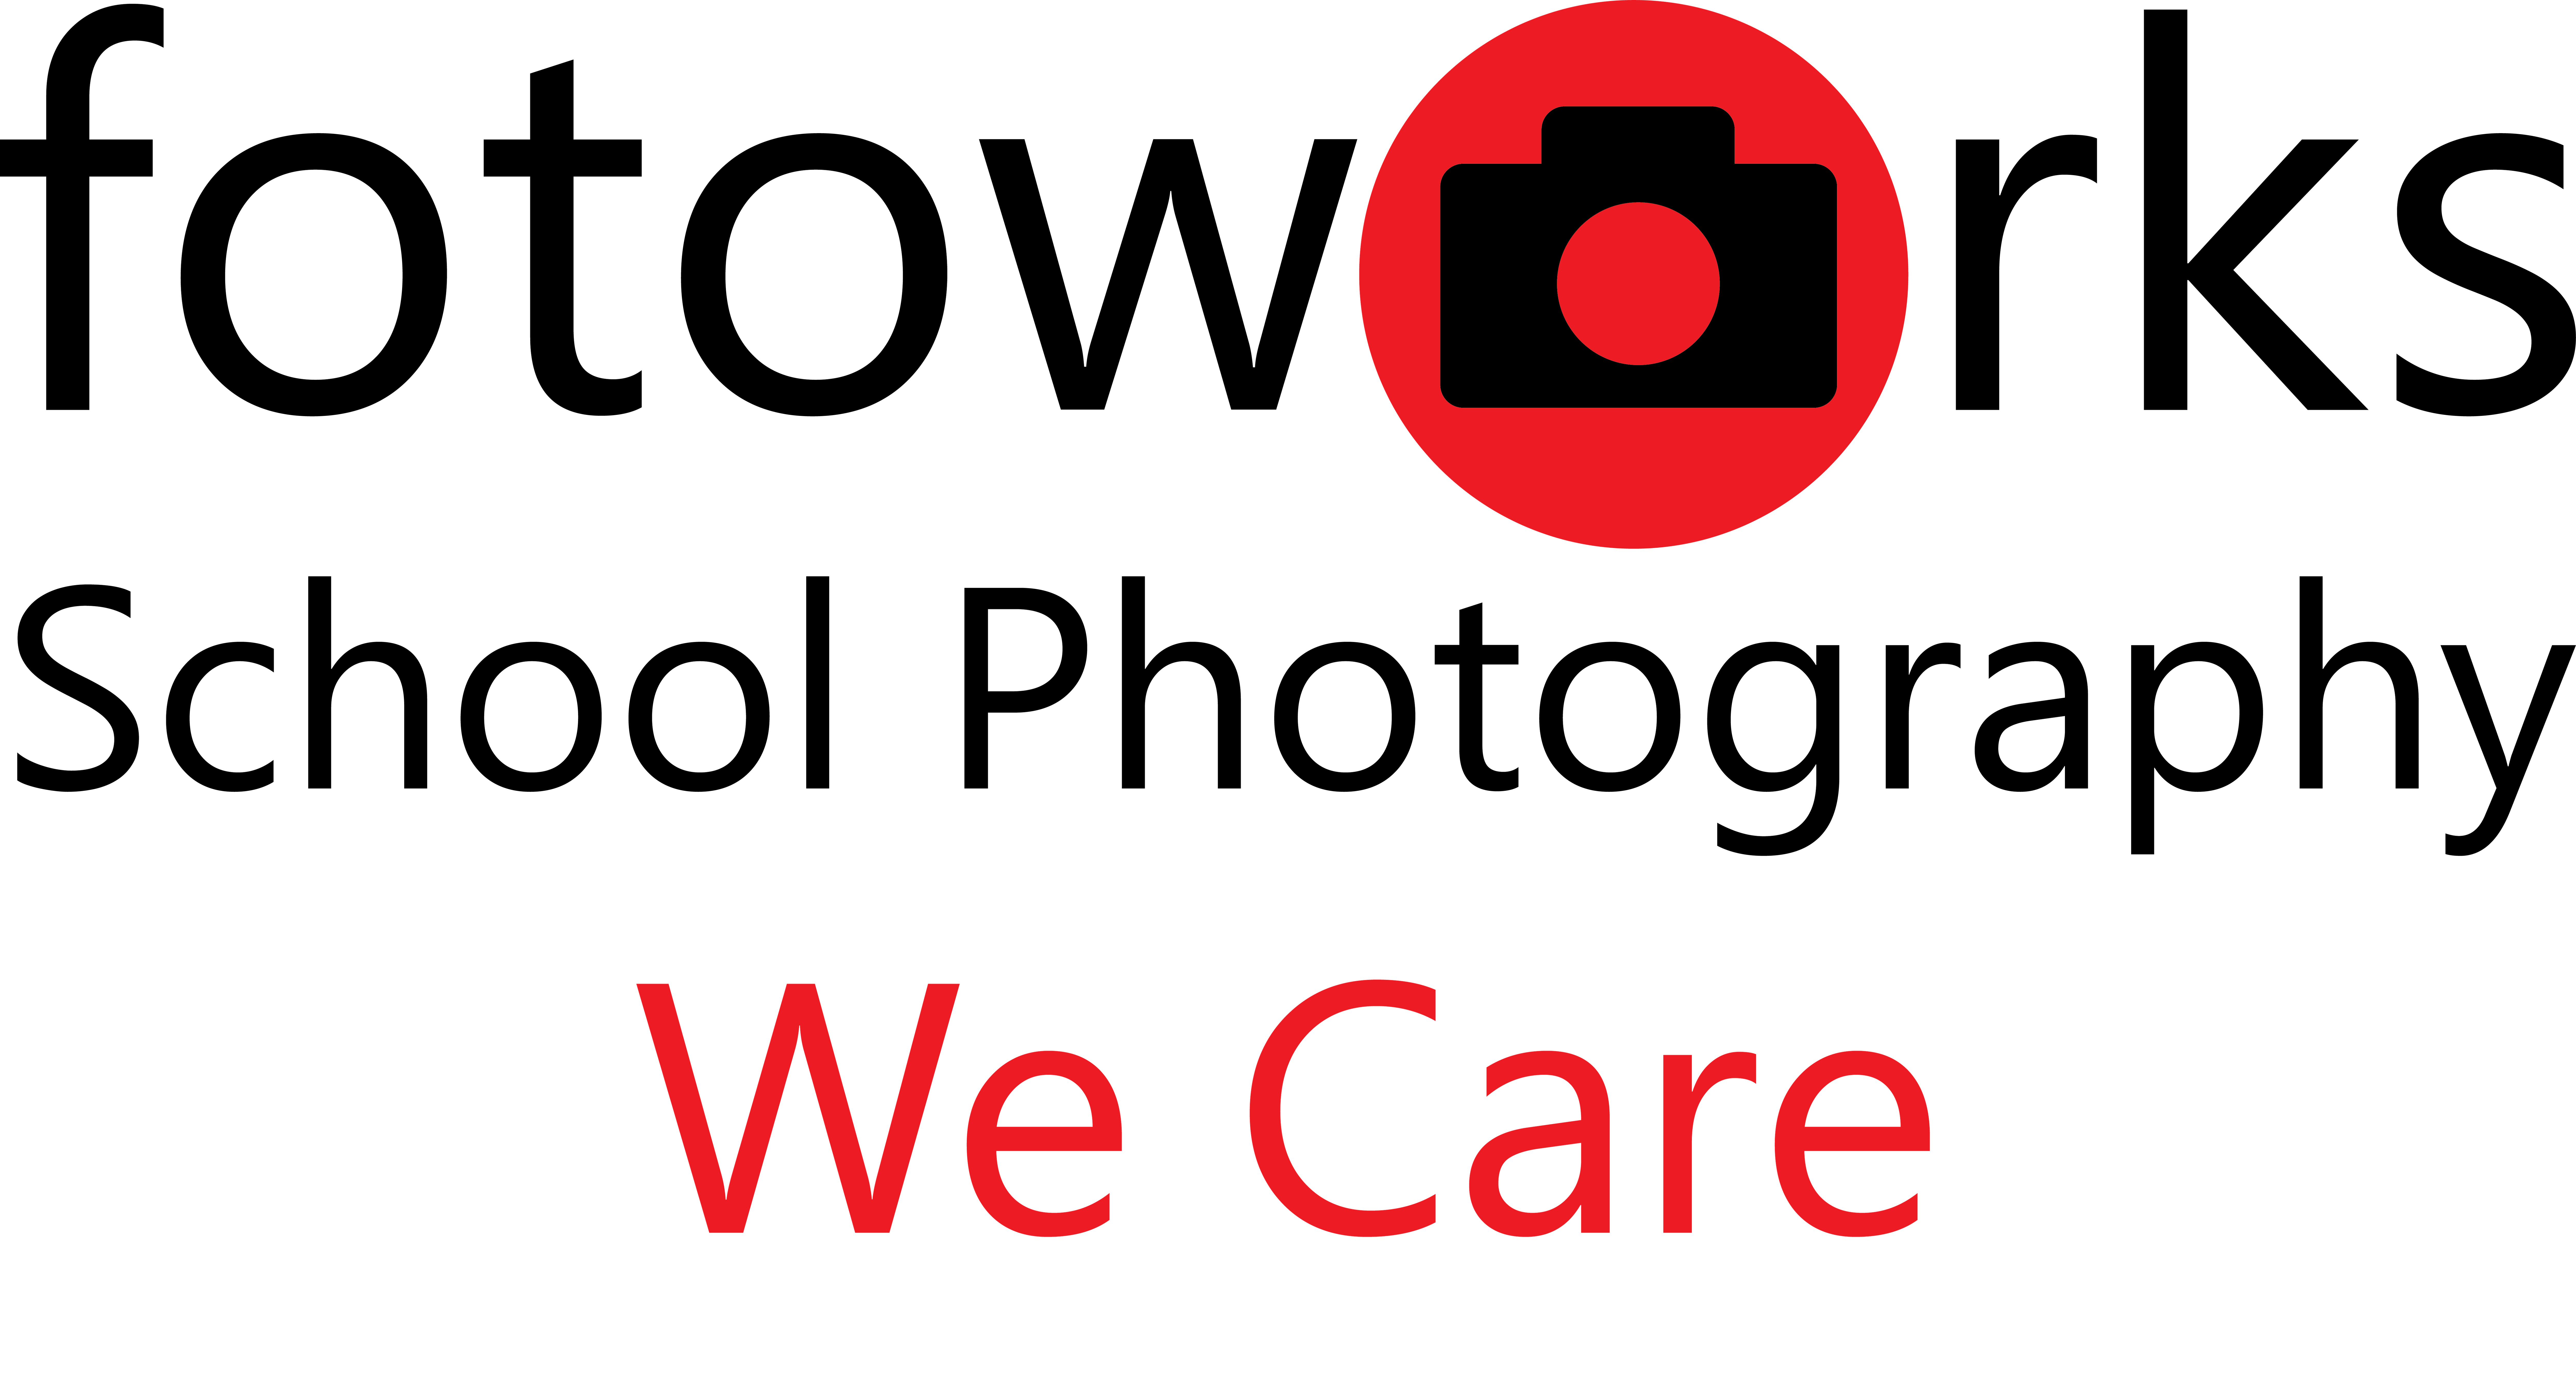 NEW Fotoworks Logo WE CARE